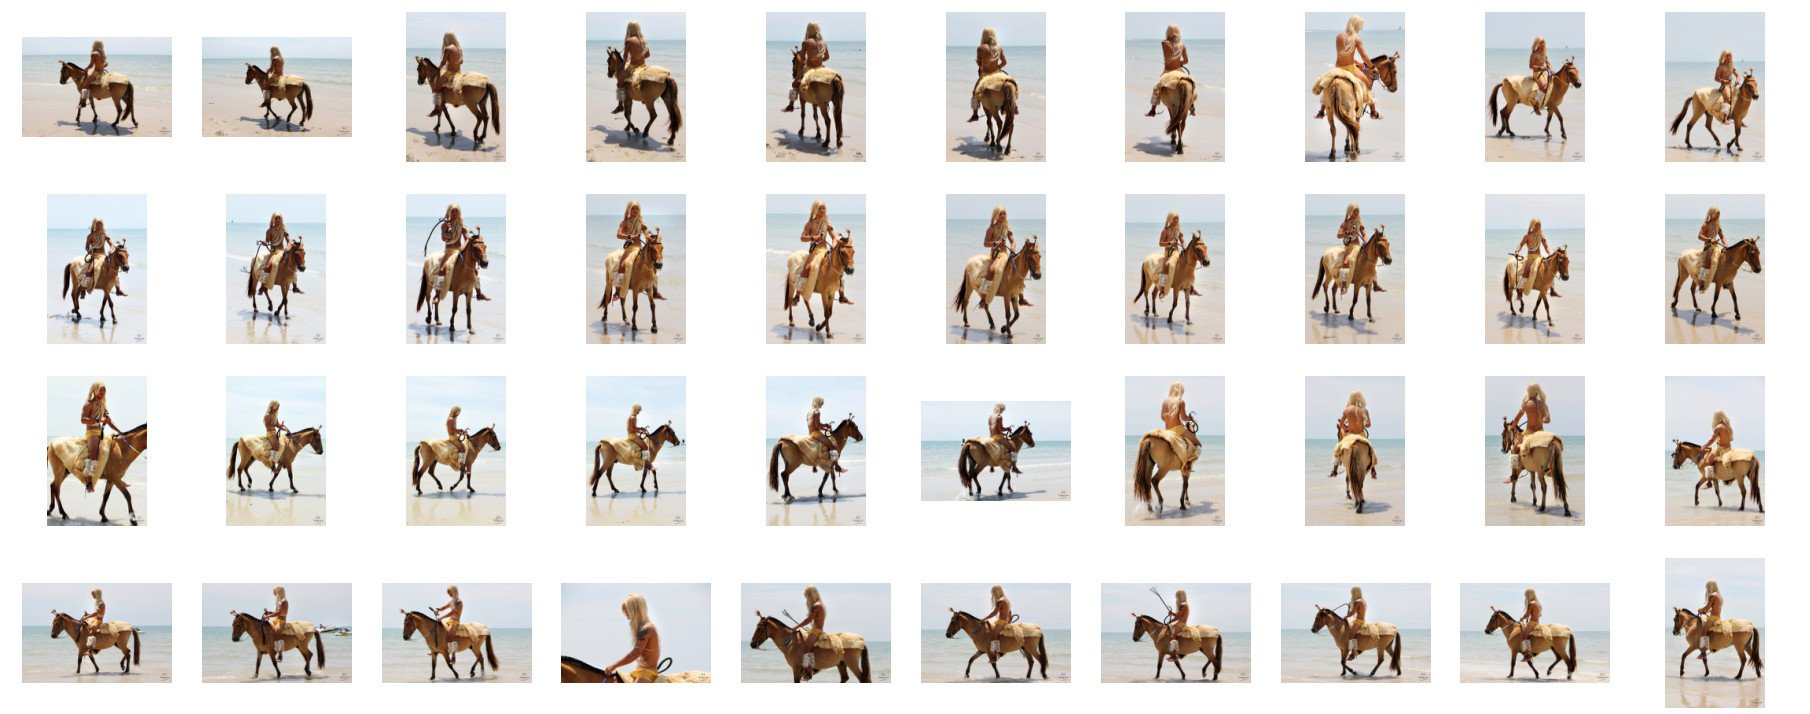 David in Fur Coat Riding Bareback on Golden Pony, Part 6 - Riding.Vision